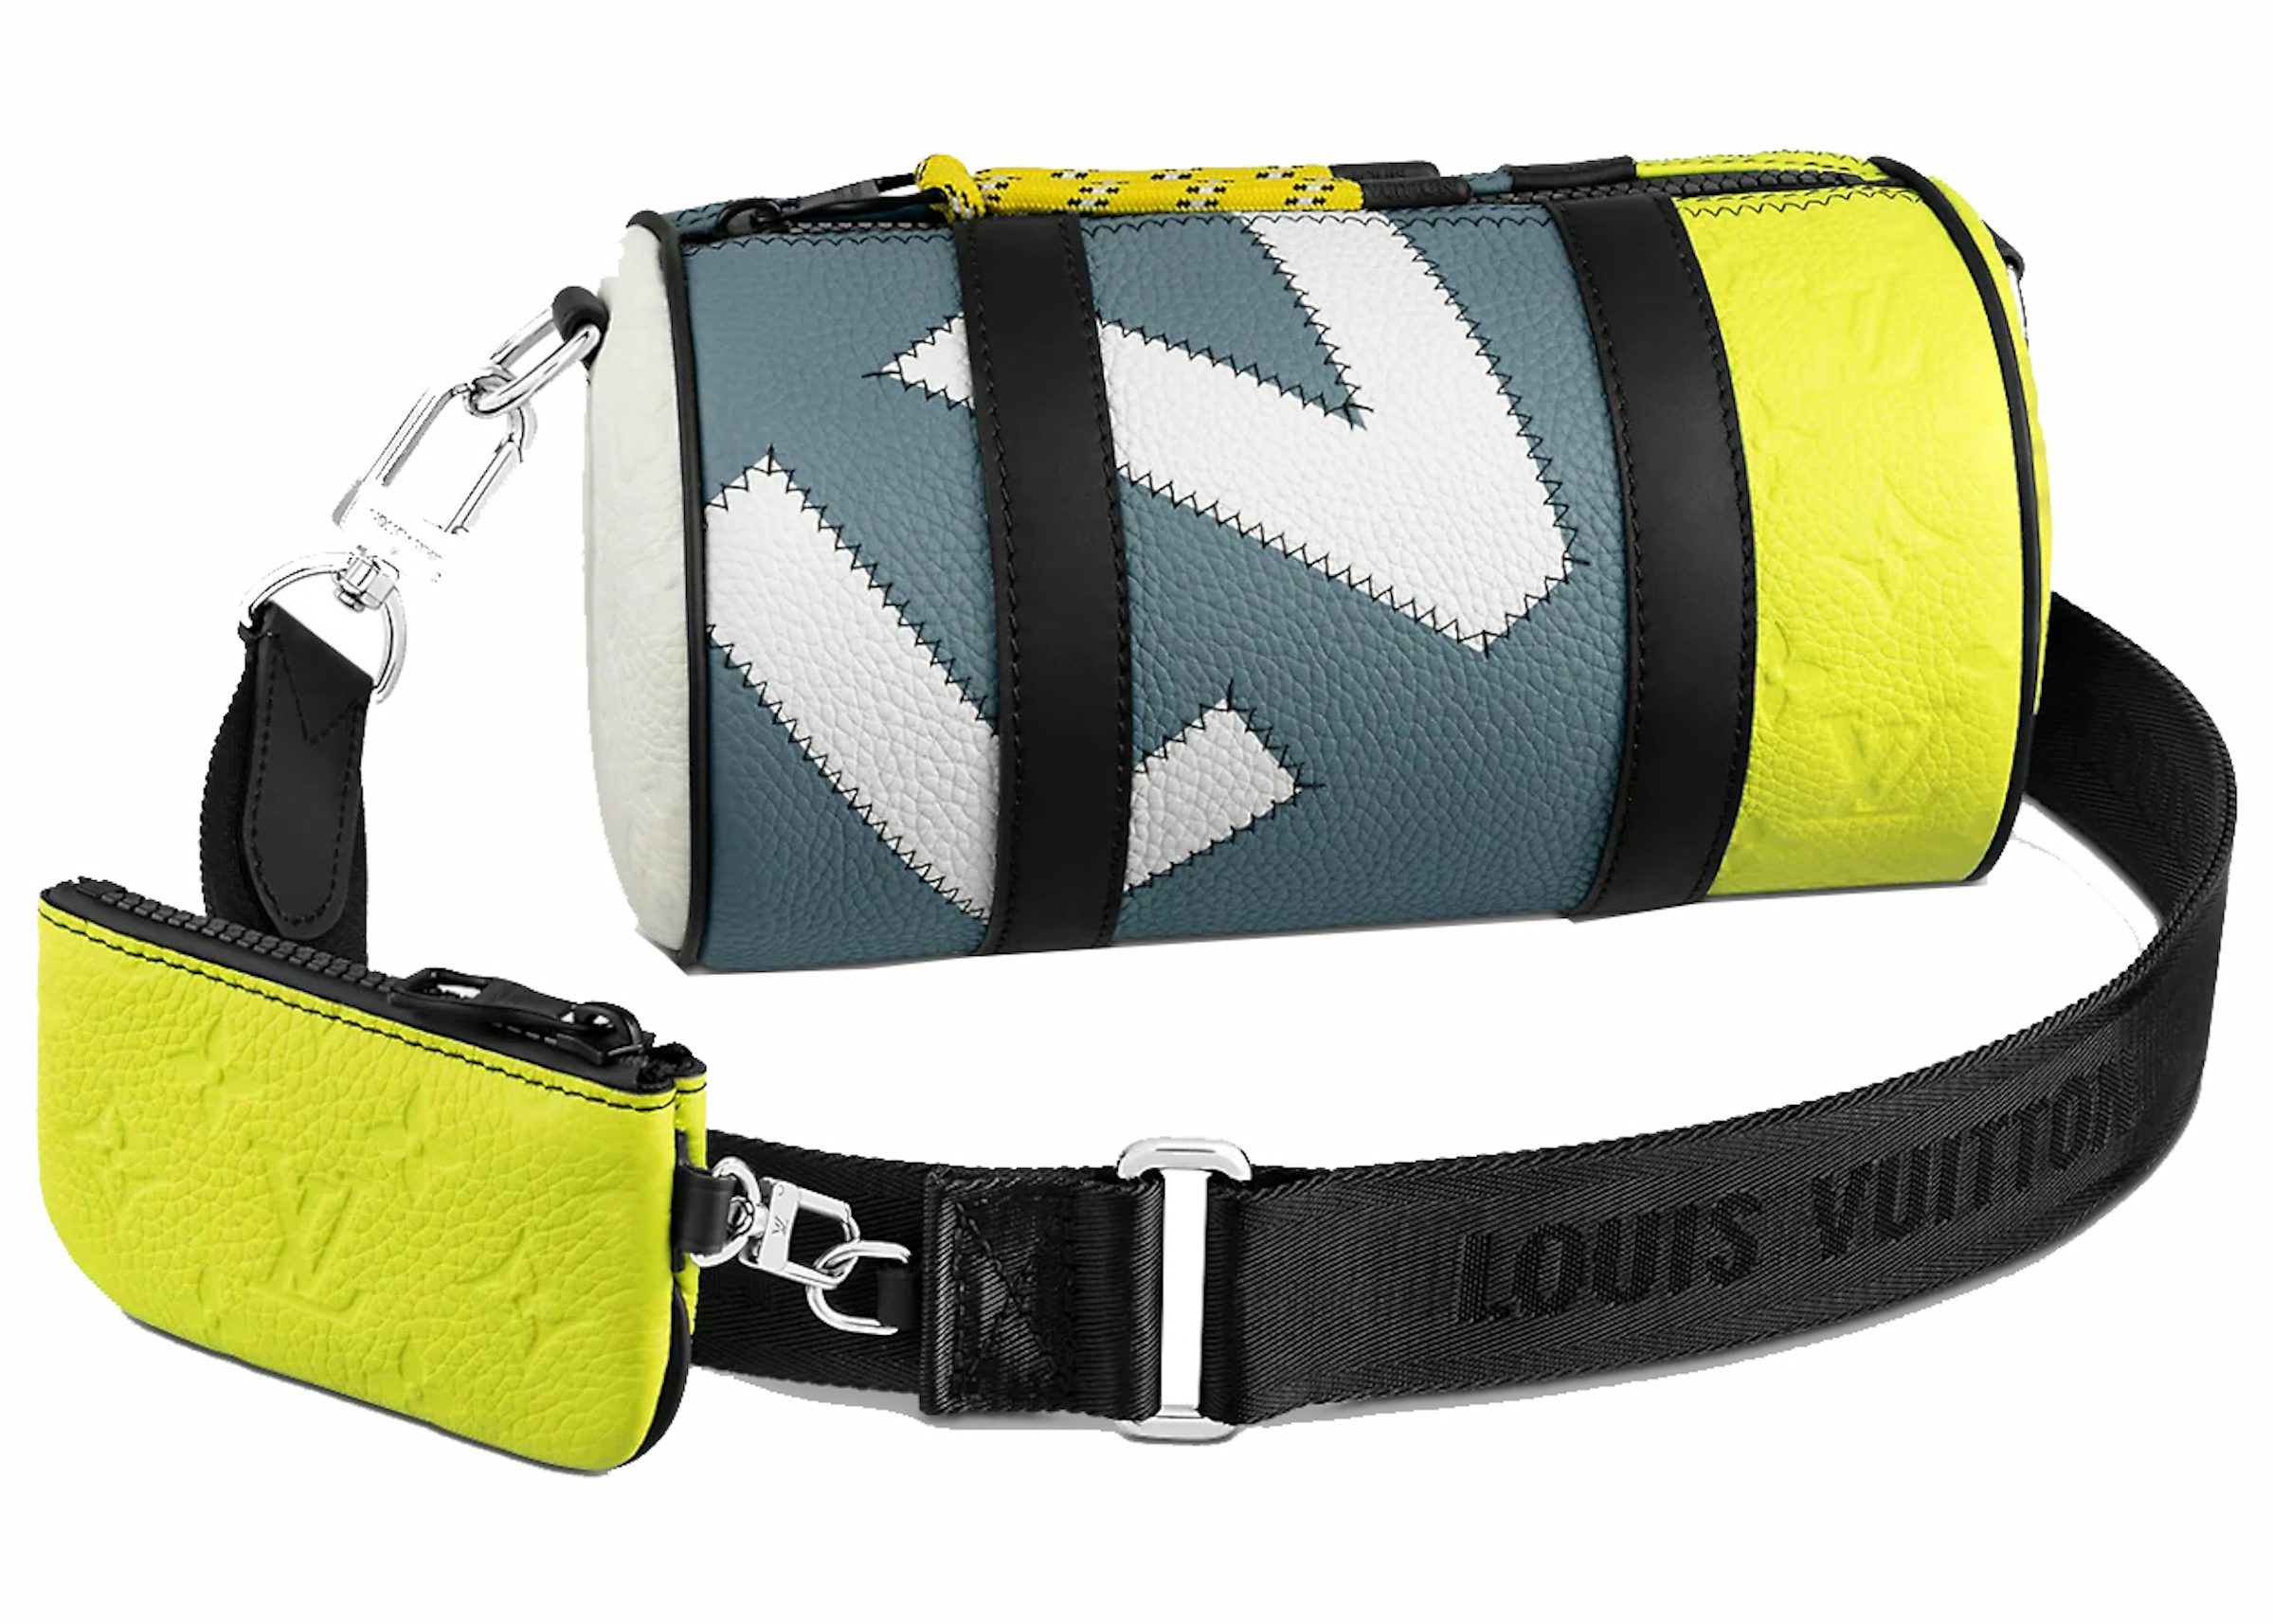 Blinding Bright LV!!! Louis Vuitton Duo Sling bag in Neon Yellow. 